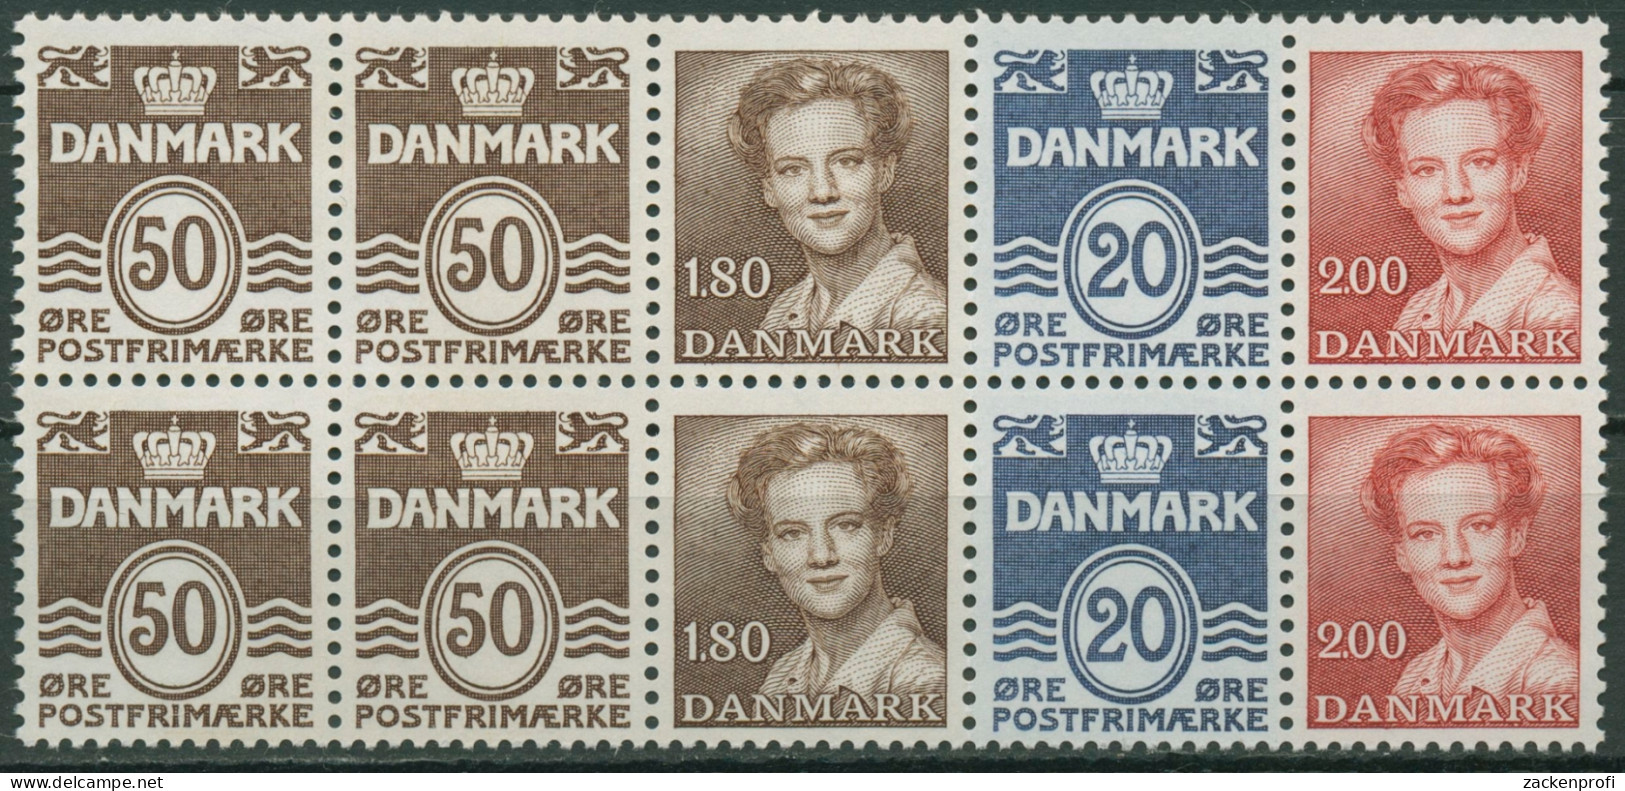 Dänemark 1974 Markenheftchenblatt H-Bl. 19 Postfrisch (C96552) - Carnets